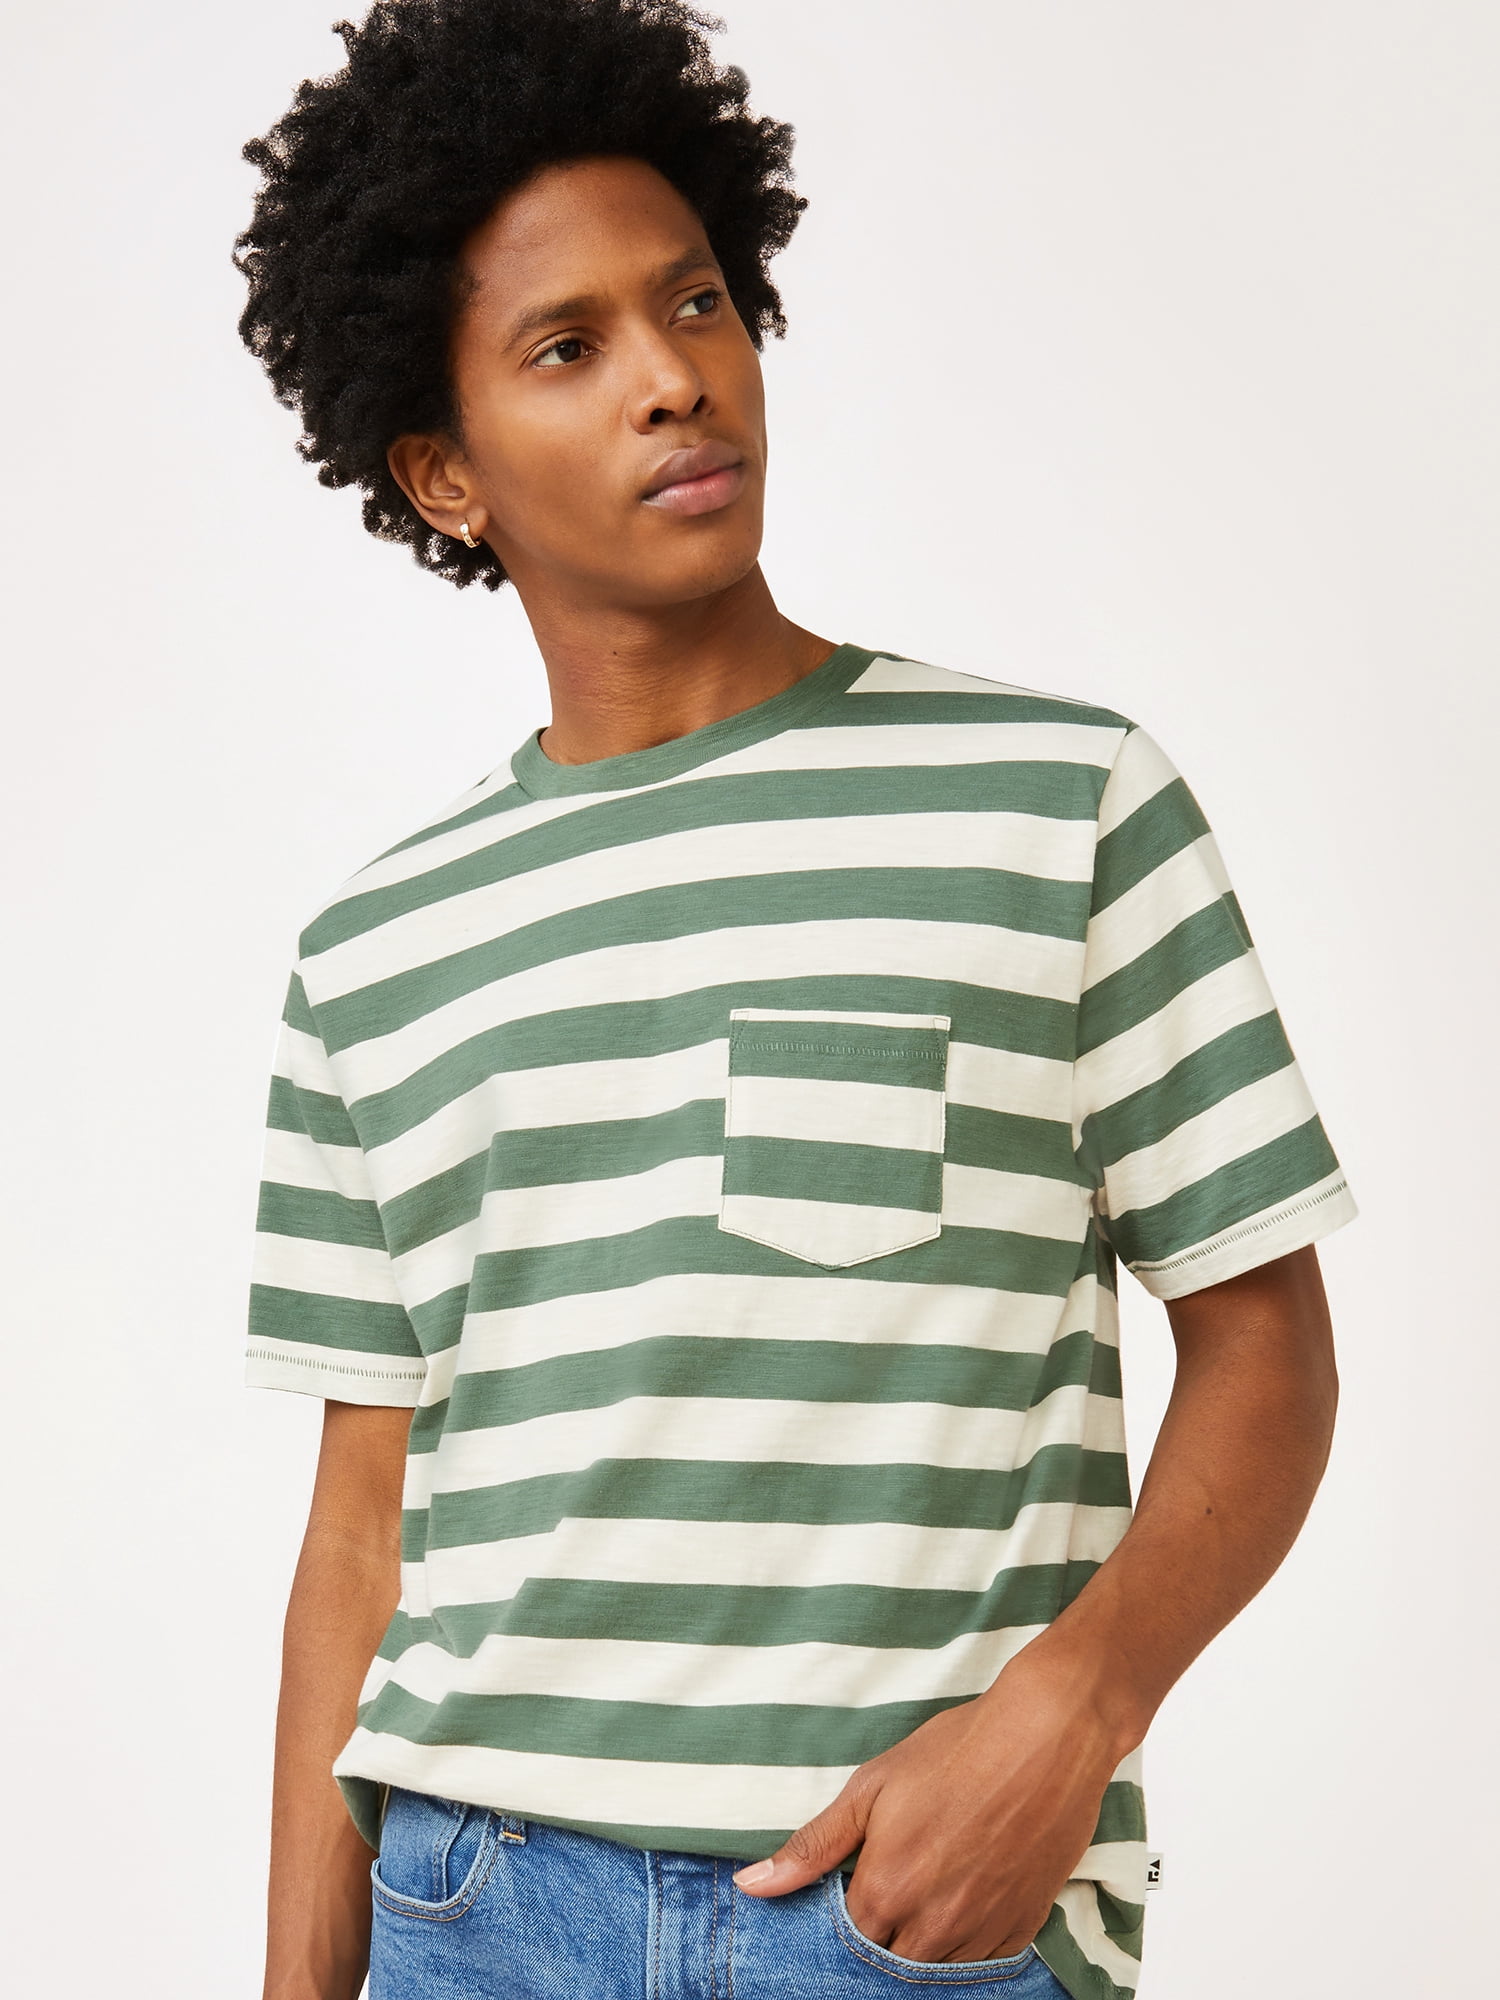 Free Assembly Men's Short Sleeve Striped Pocket T-Shirt - Walmart.com